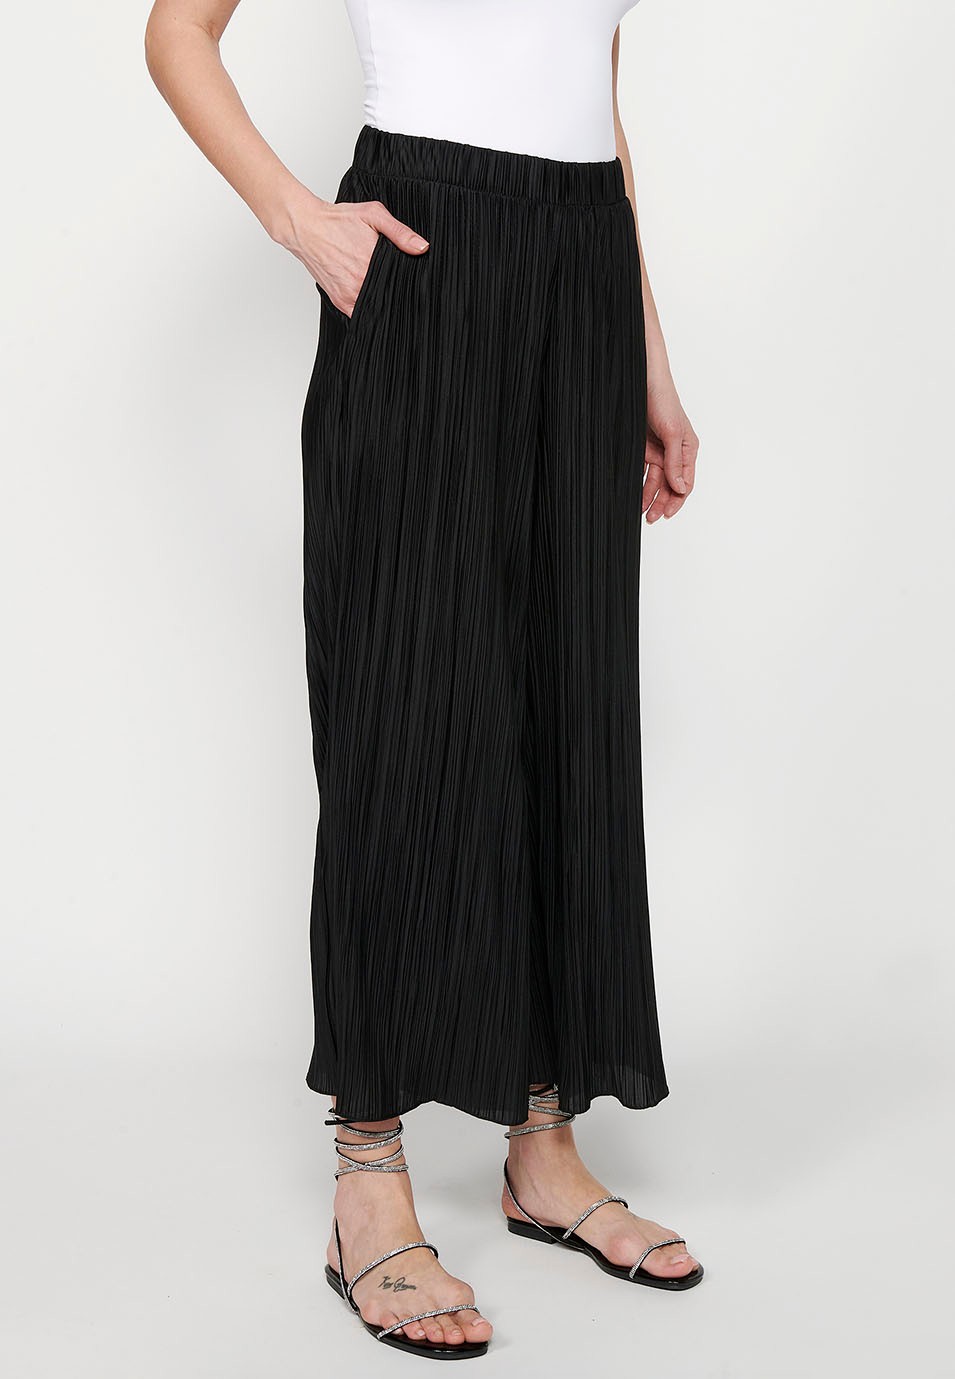 Pantalón largo ligero, cintura engomada, tela plisada color negro para mujer